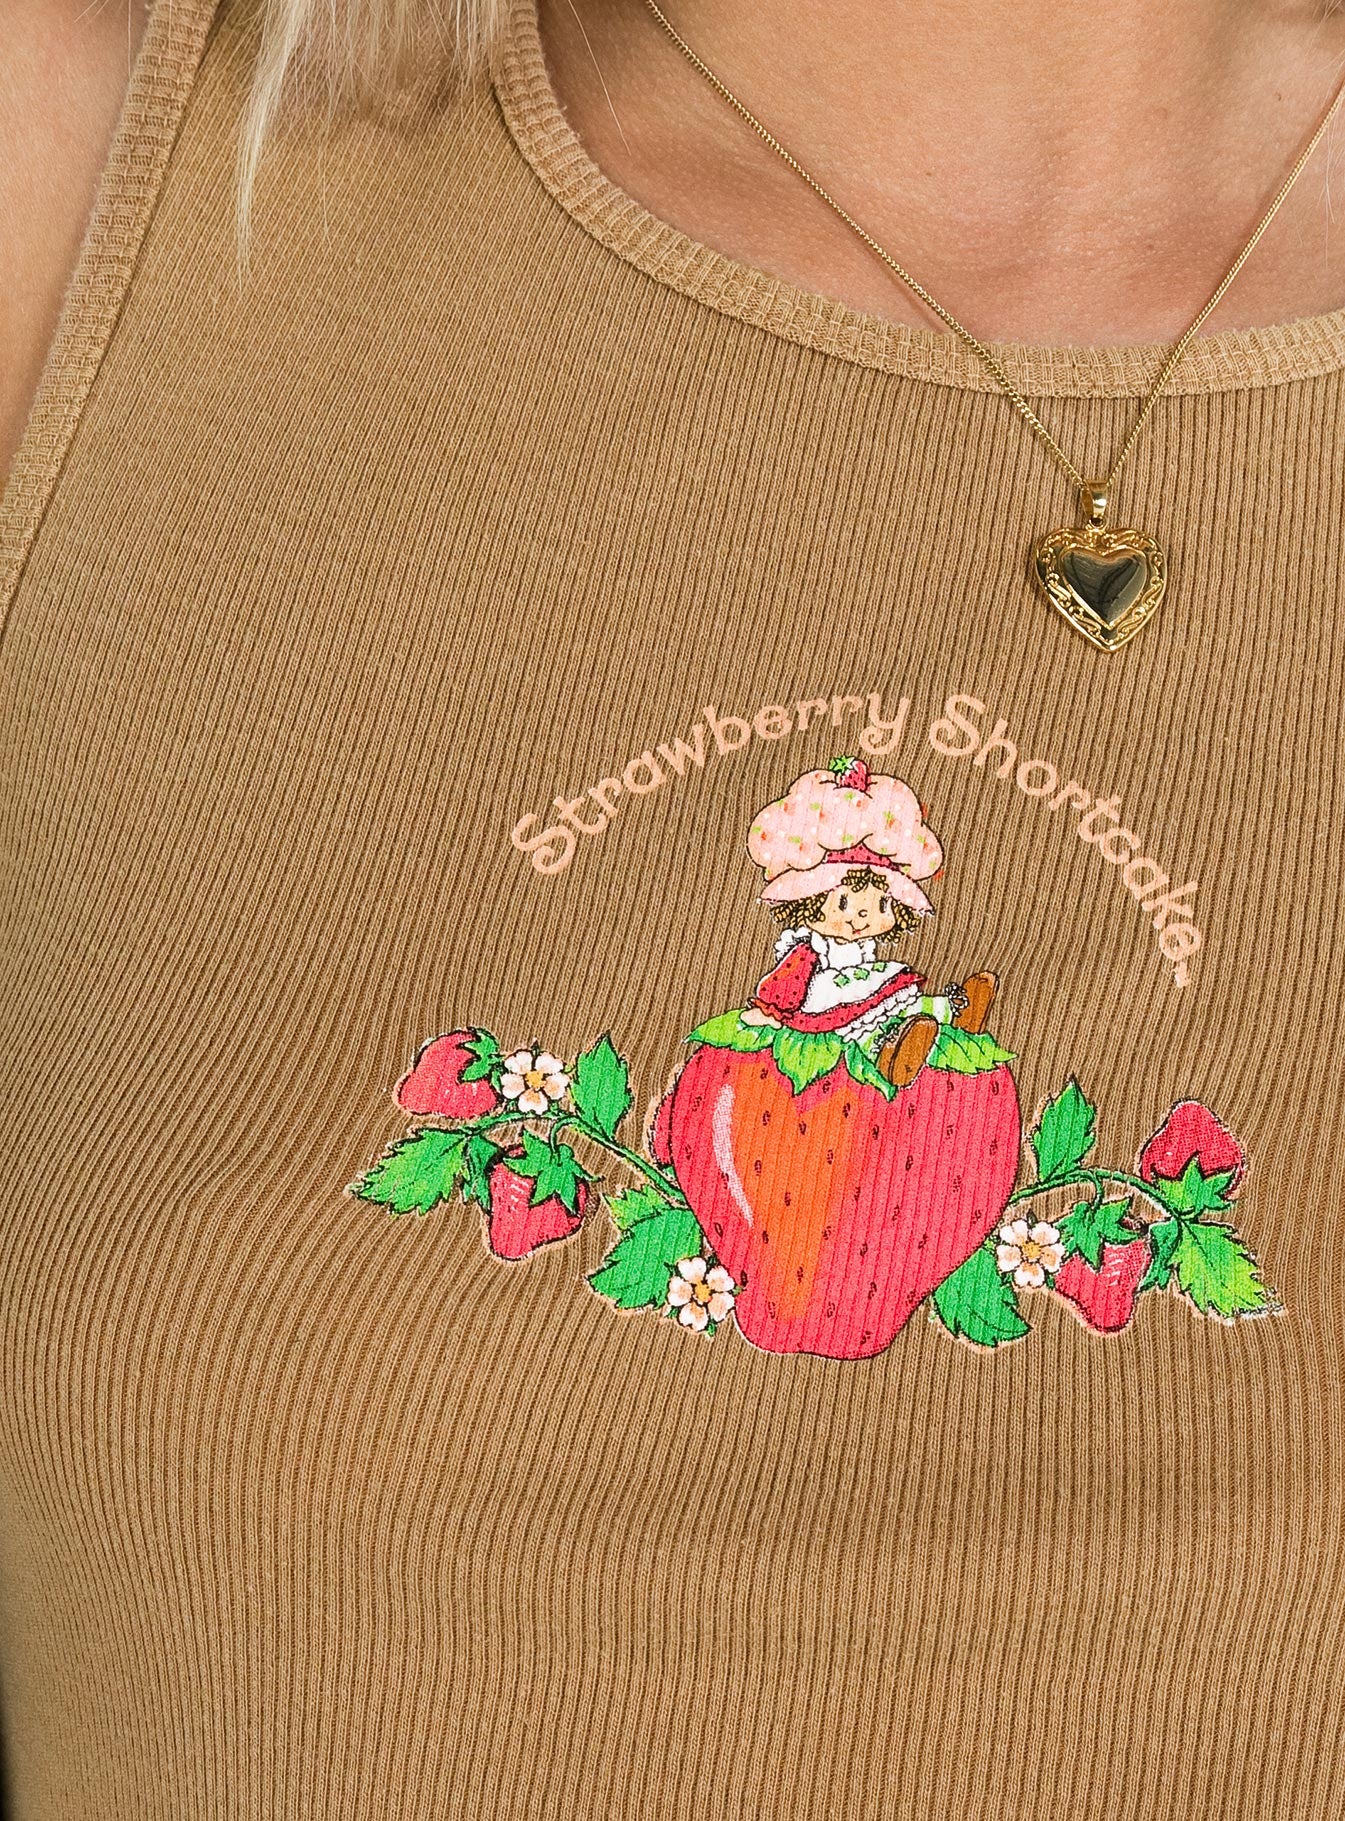 Strawberry Shortcake Necklace – New Morals